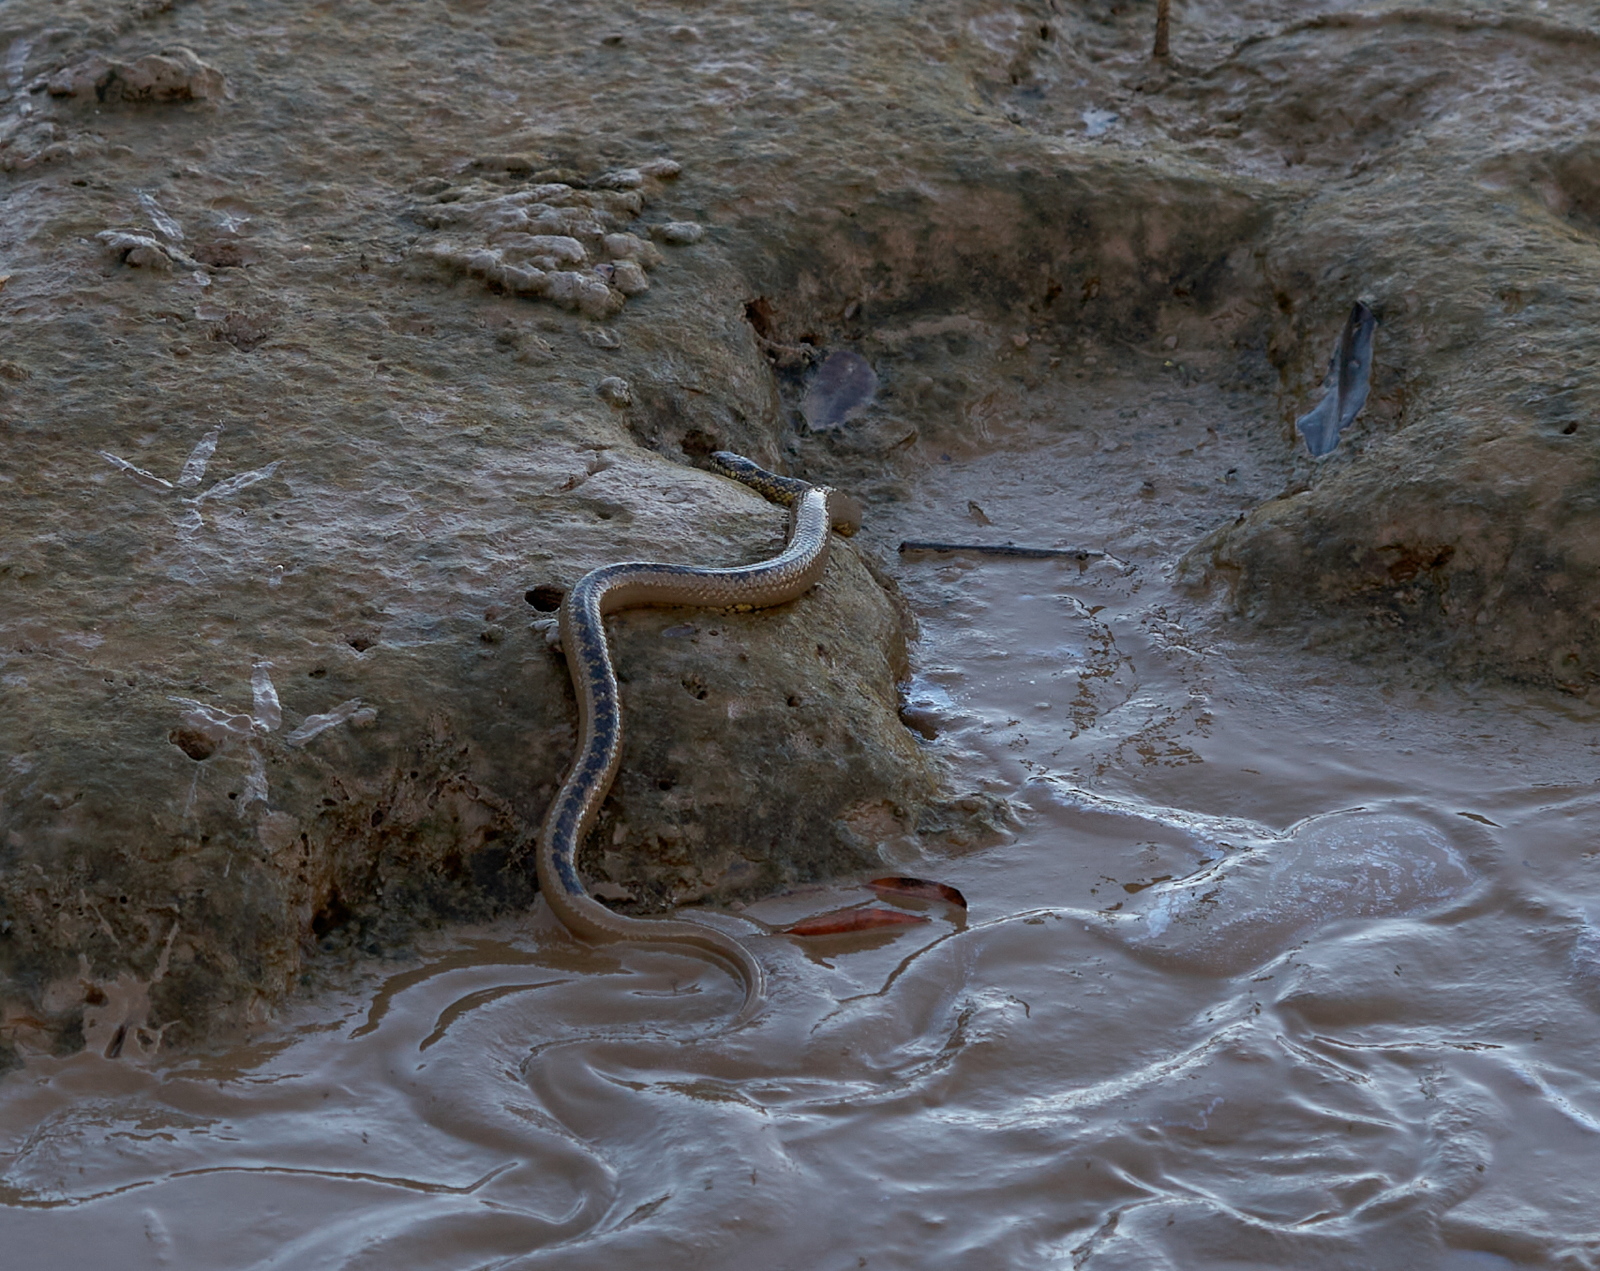 Erythrolamprus cobella or mangrove snake (Dipsadidae)